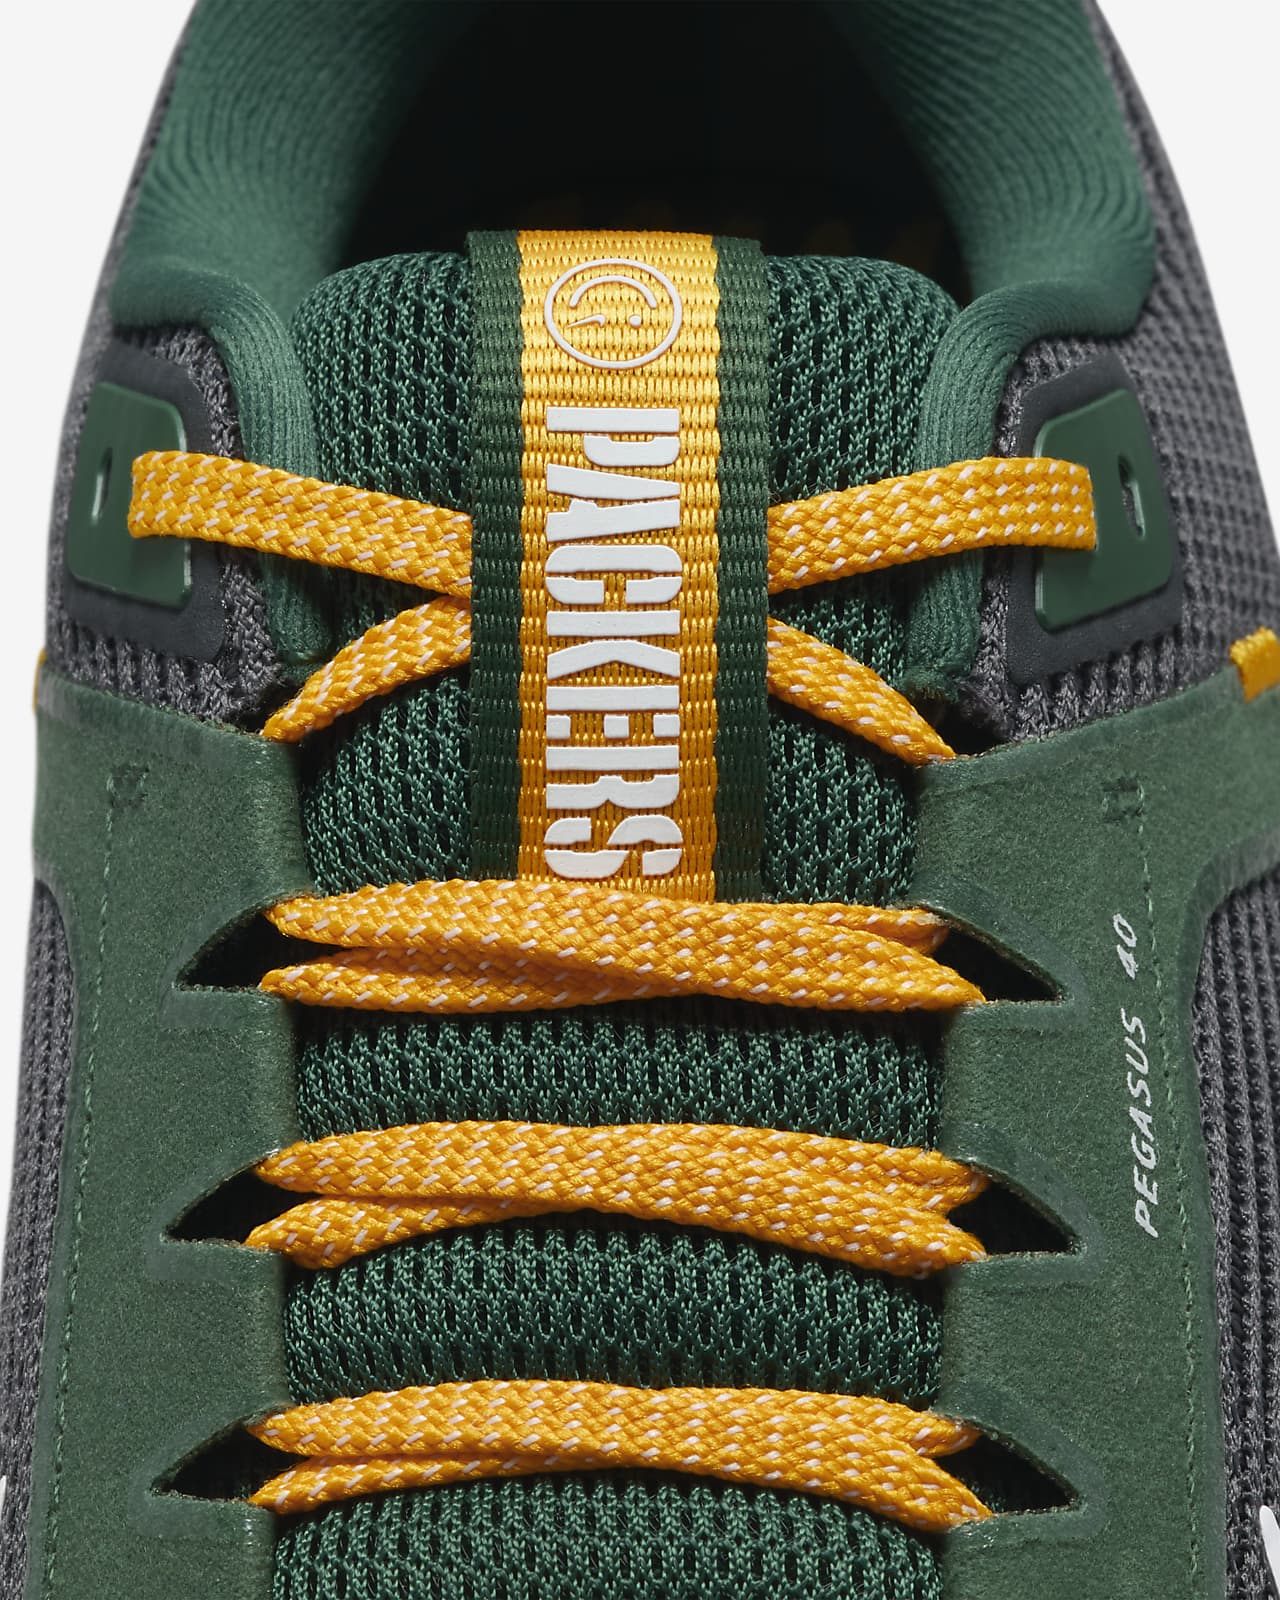 greenbay packer shoes